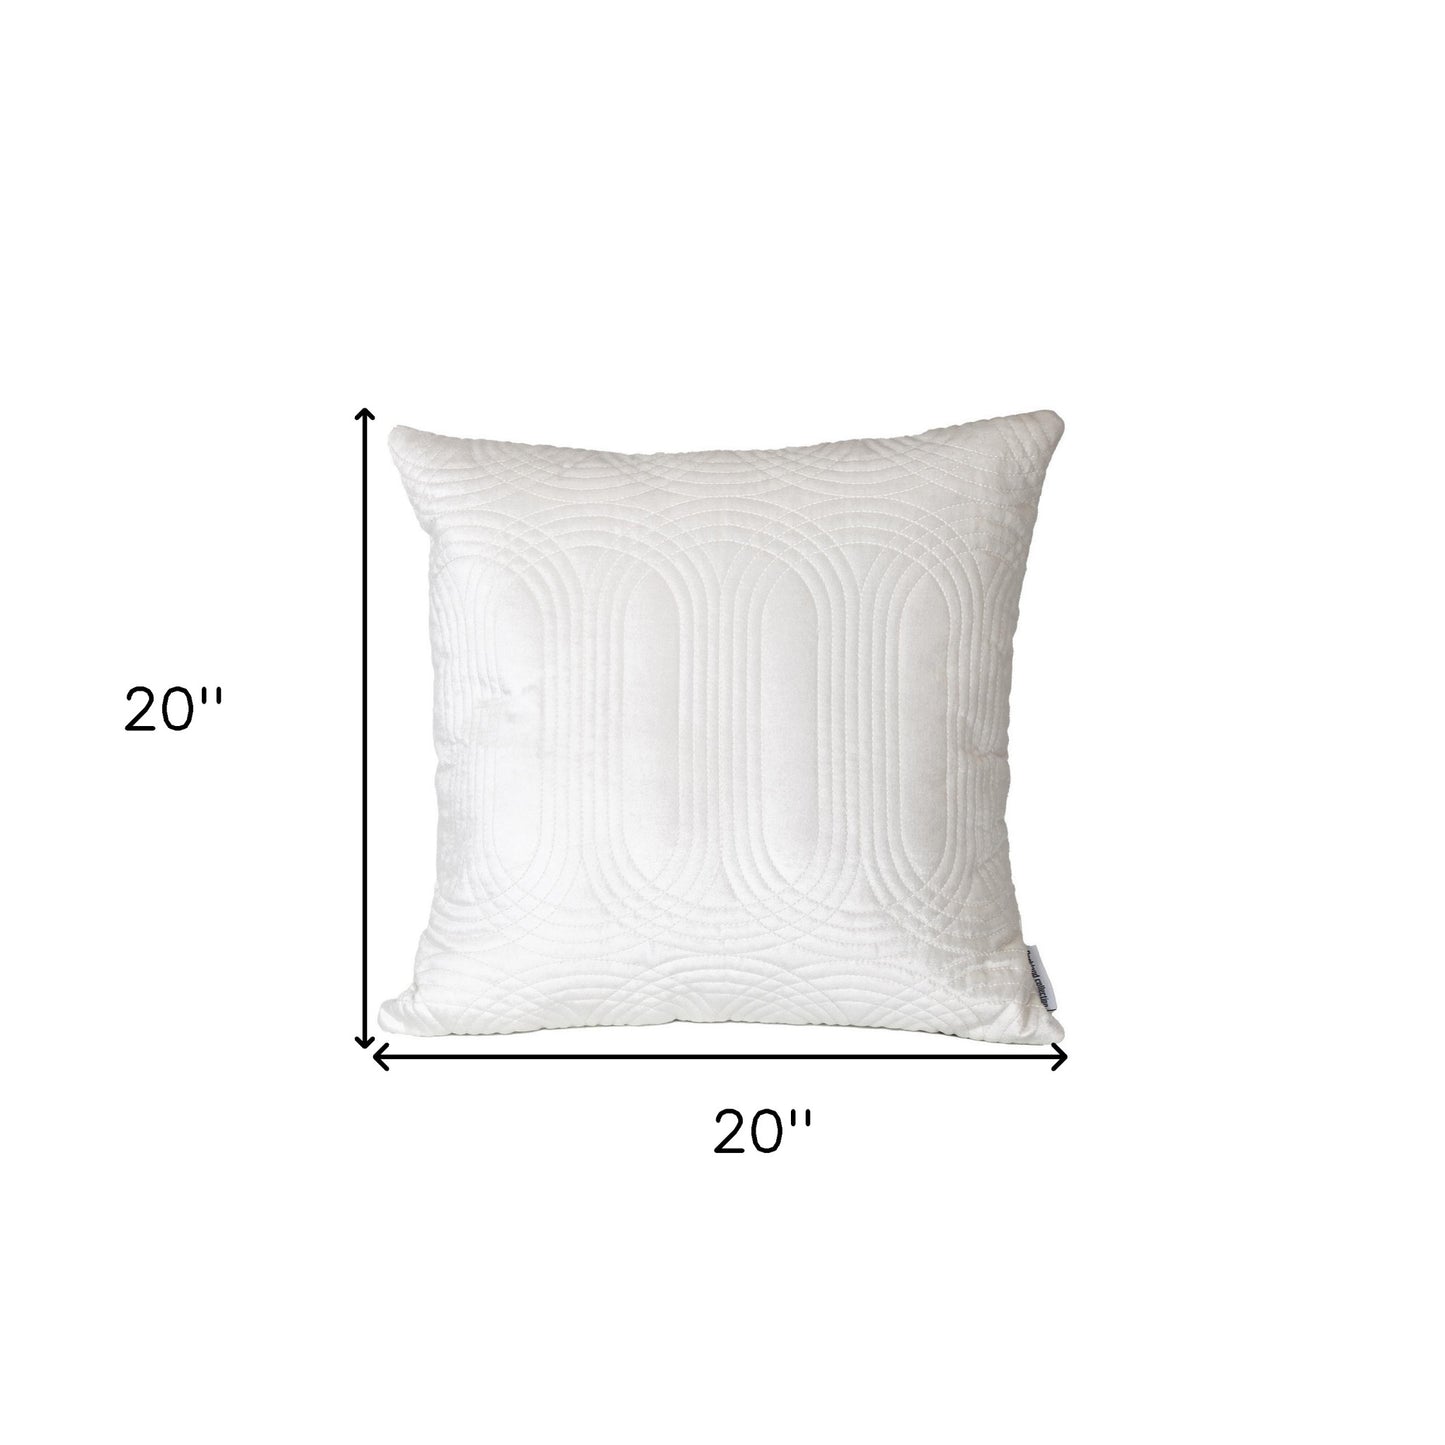 Quilted Velvet White Square Throw Pillow